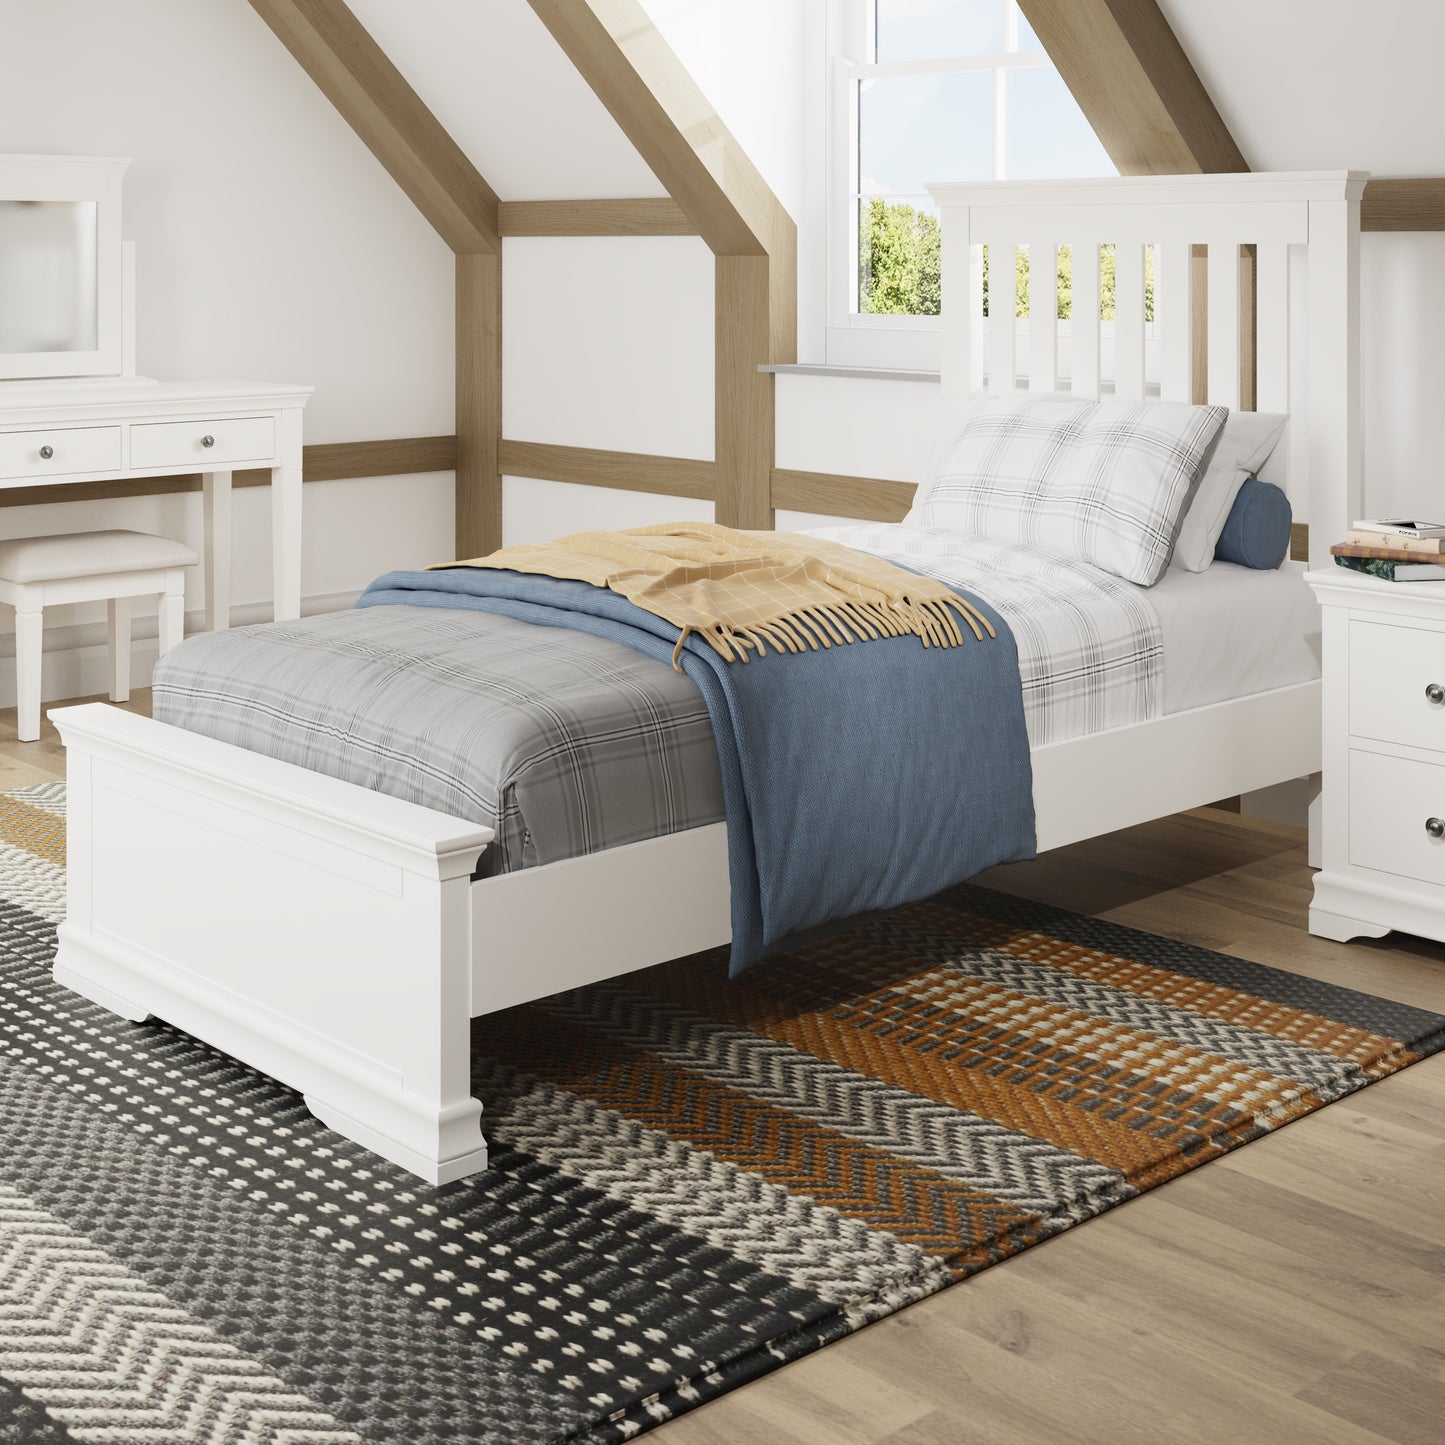 SW Bedroom - White 3' Bed